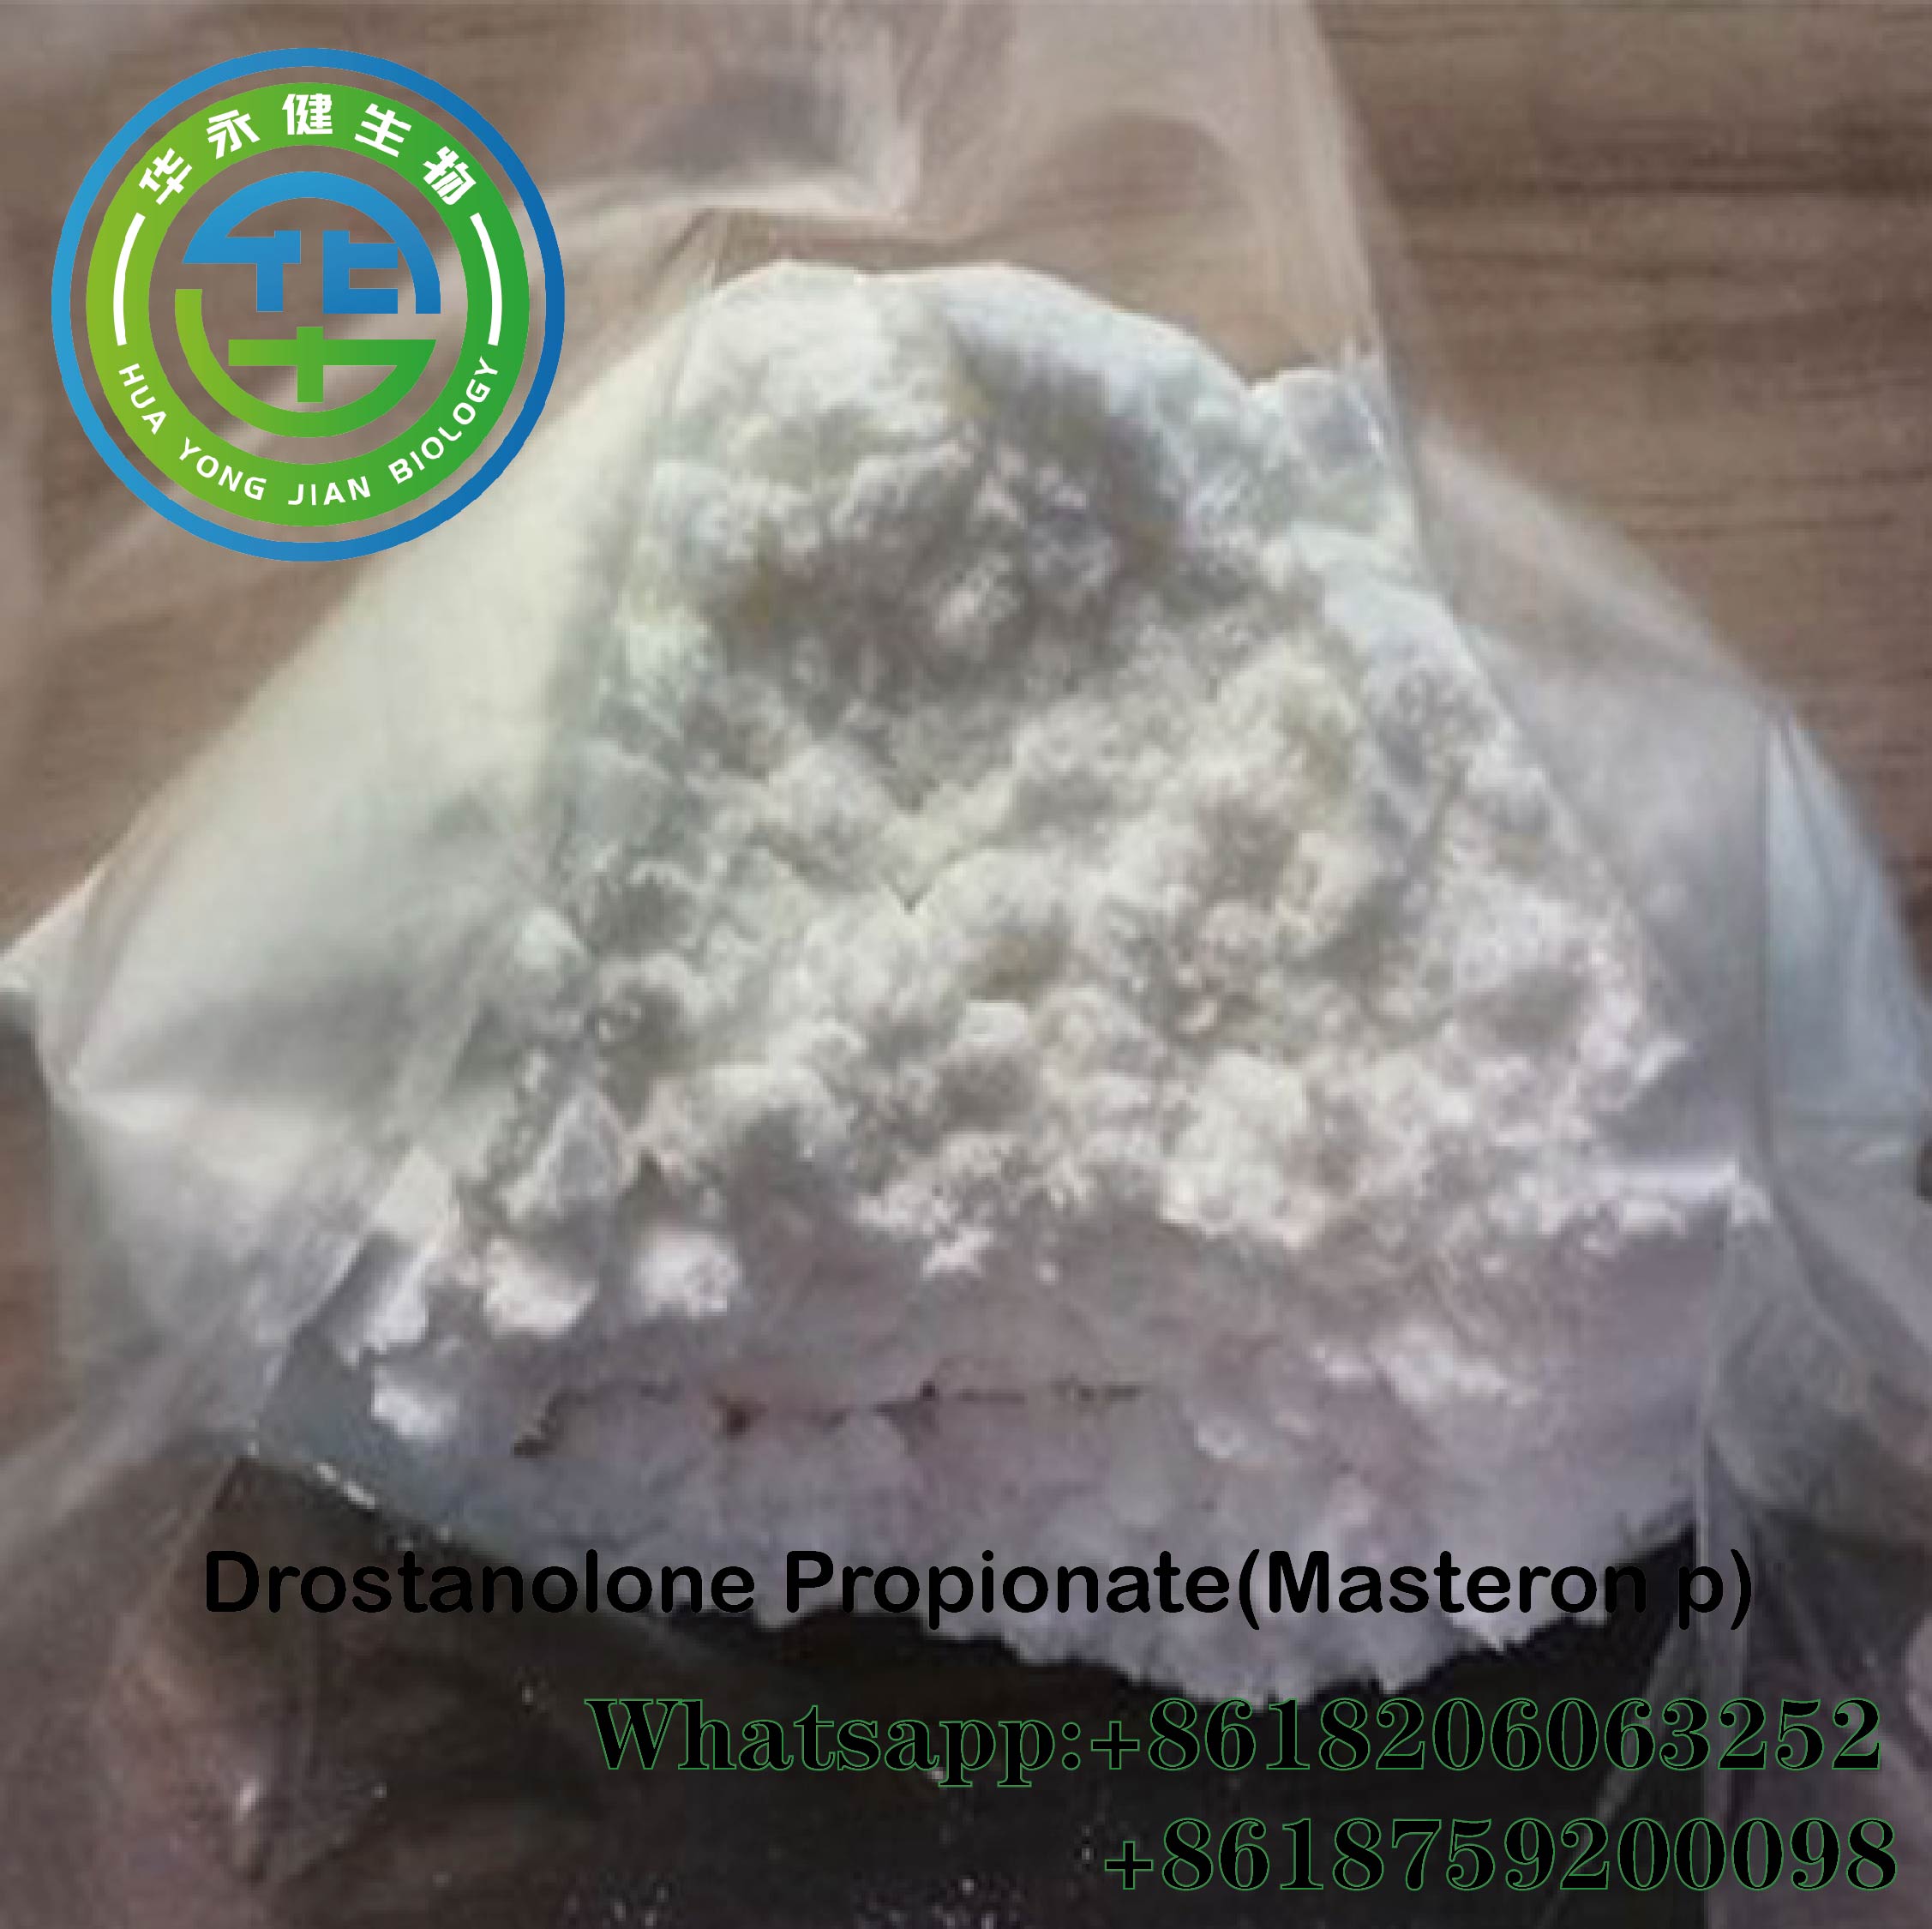 Drostanolone Propionate/Masteron raw material powder origin china for Natural Bodybuilding CAS 521-12-0 